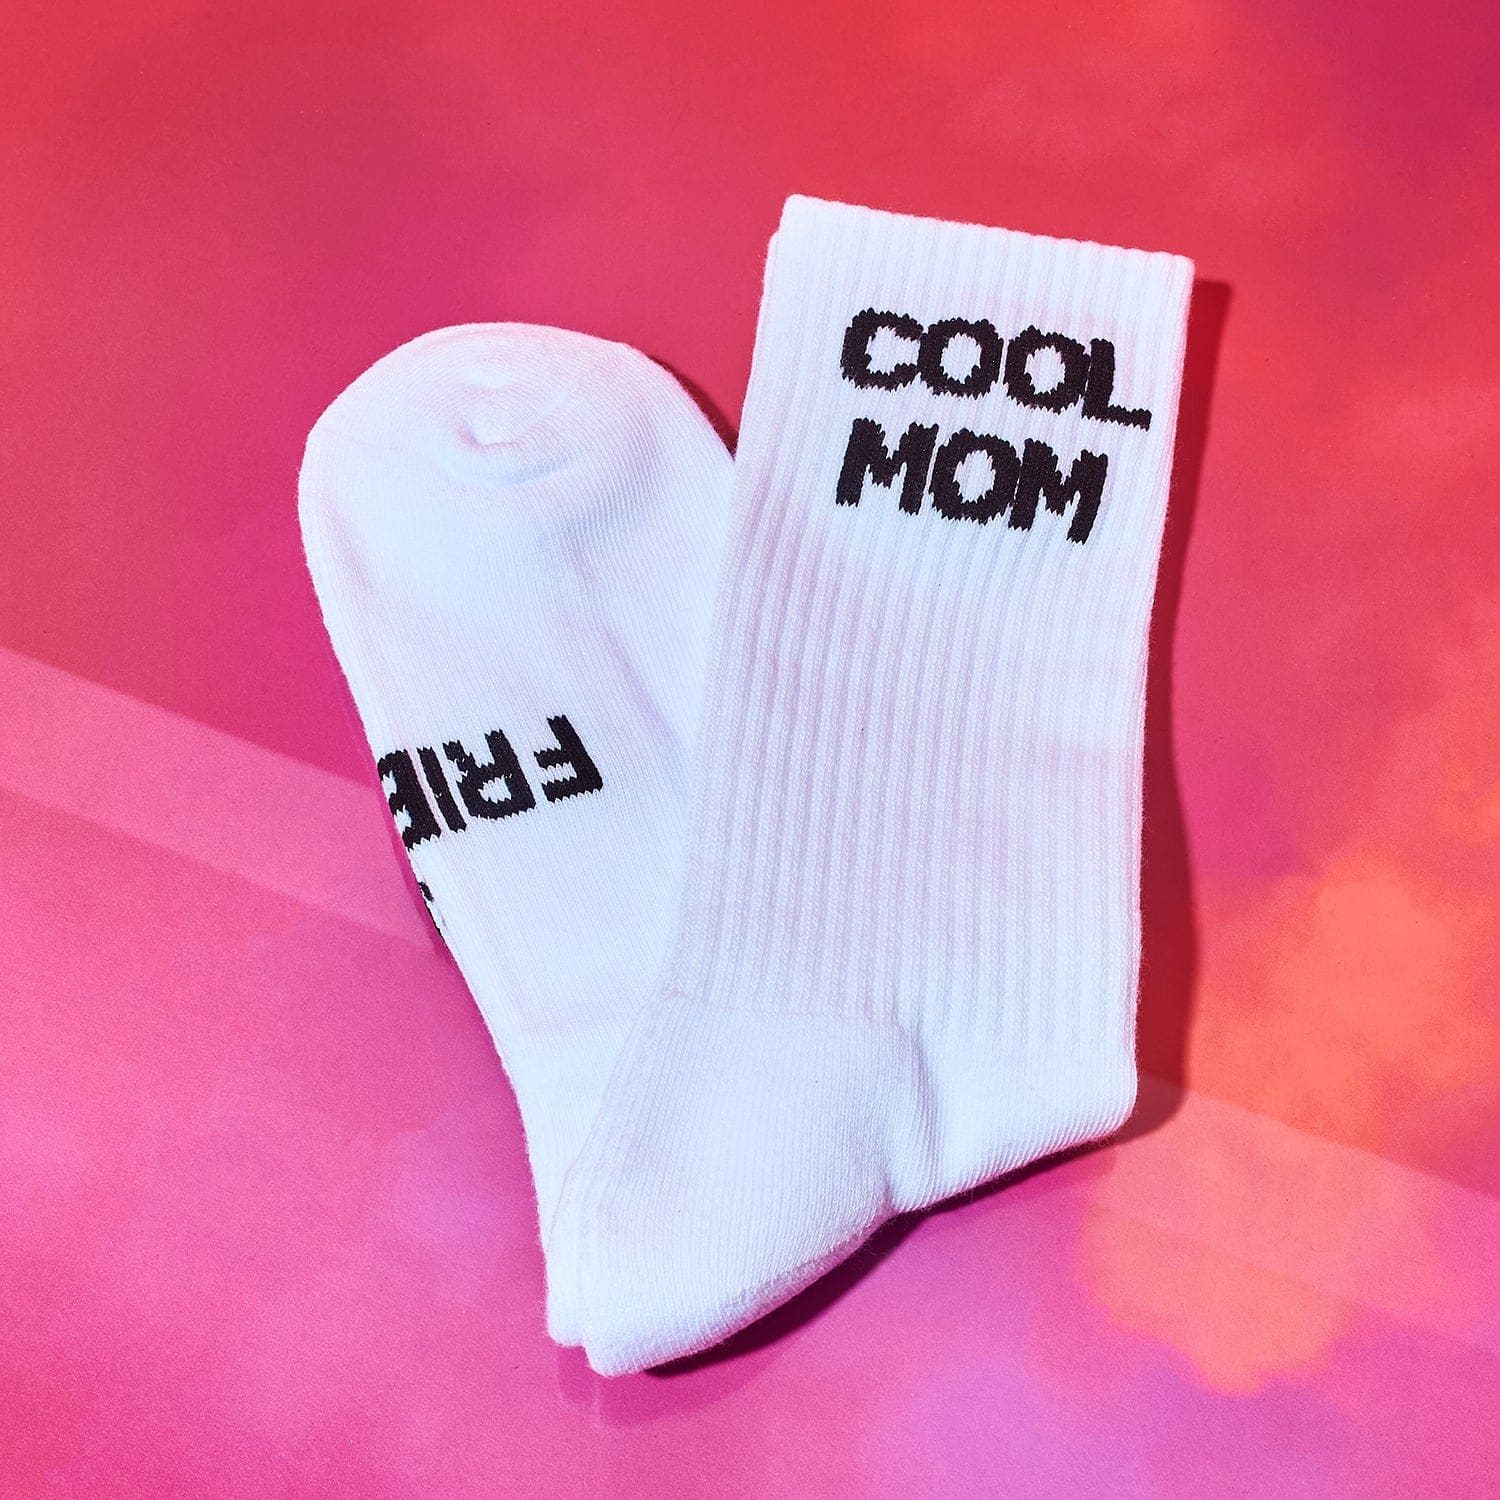 Friends Nyc Cool Mom Socks - Unisex Cool Mom - Cute Socks